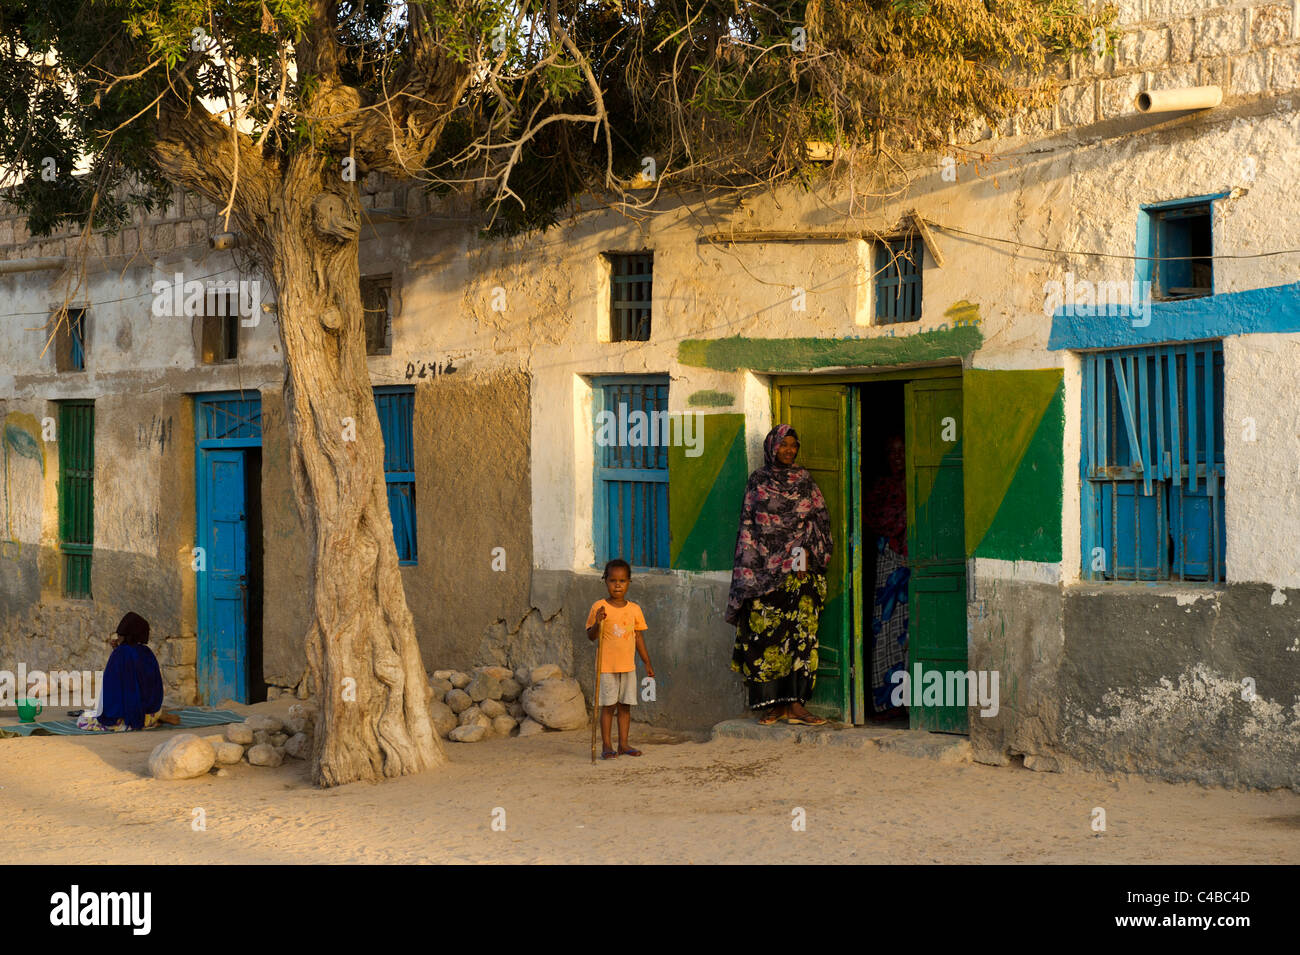 People outside their house, Berbera, Somaliland, Somalia Stock Photo